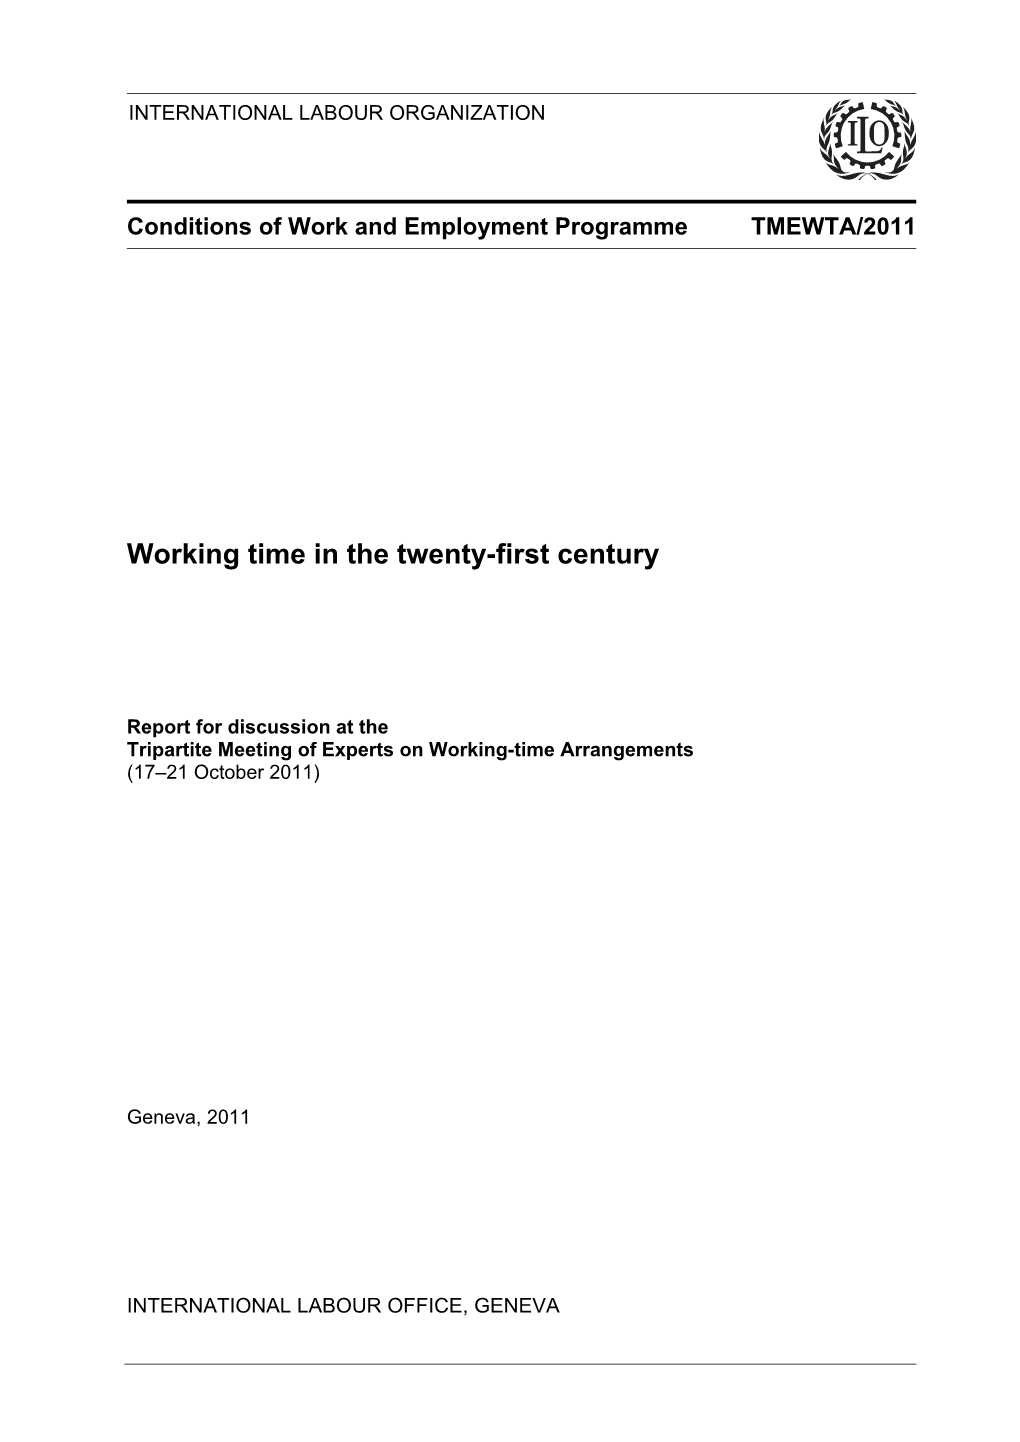 Working Time in the Twenty-First Centurypdf